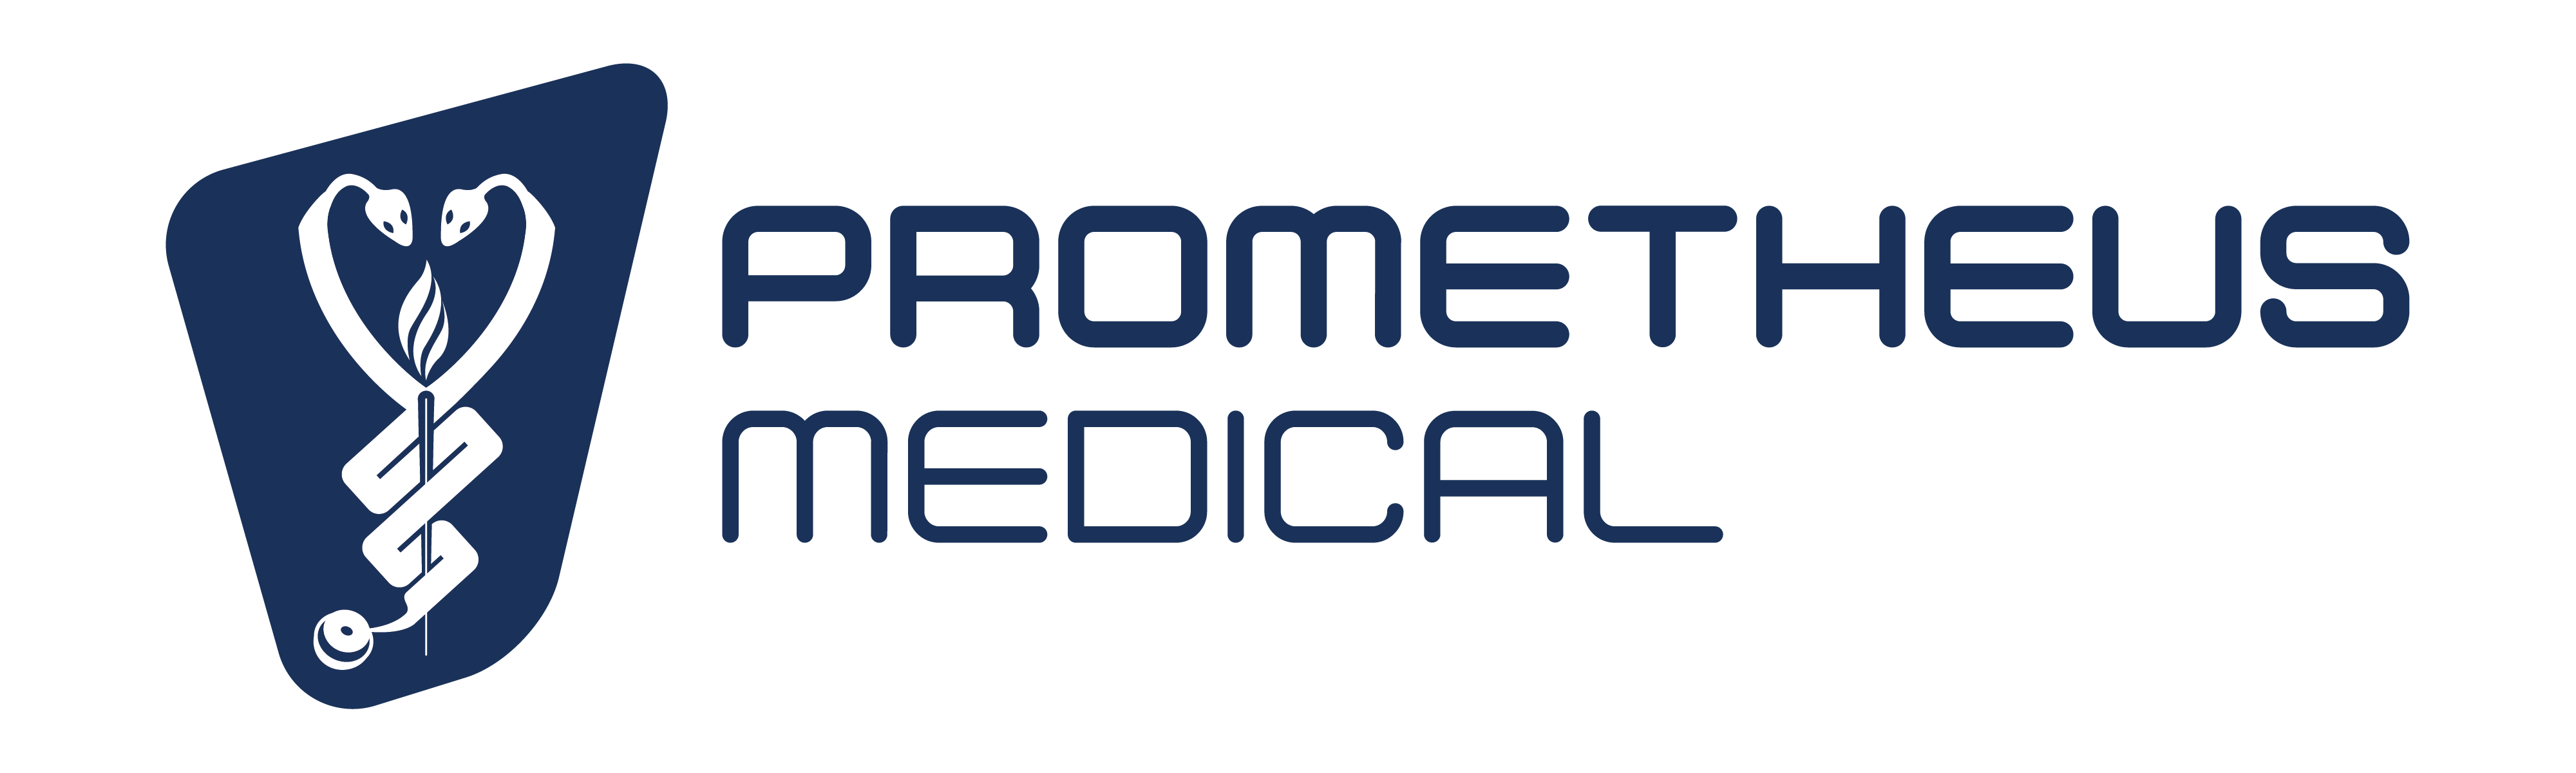 prometheus logo